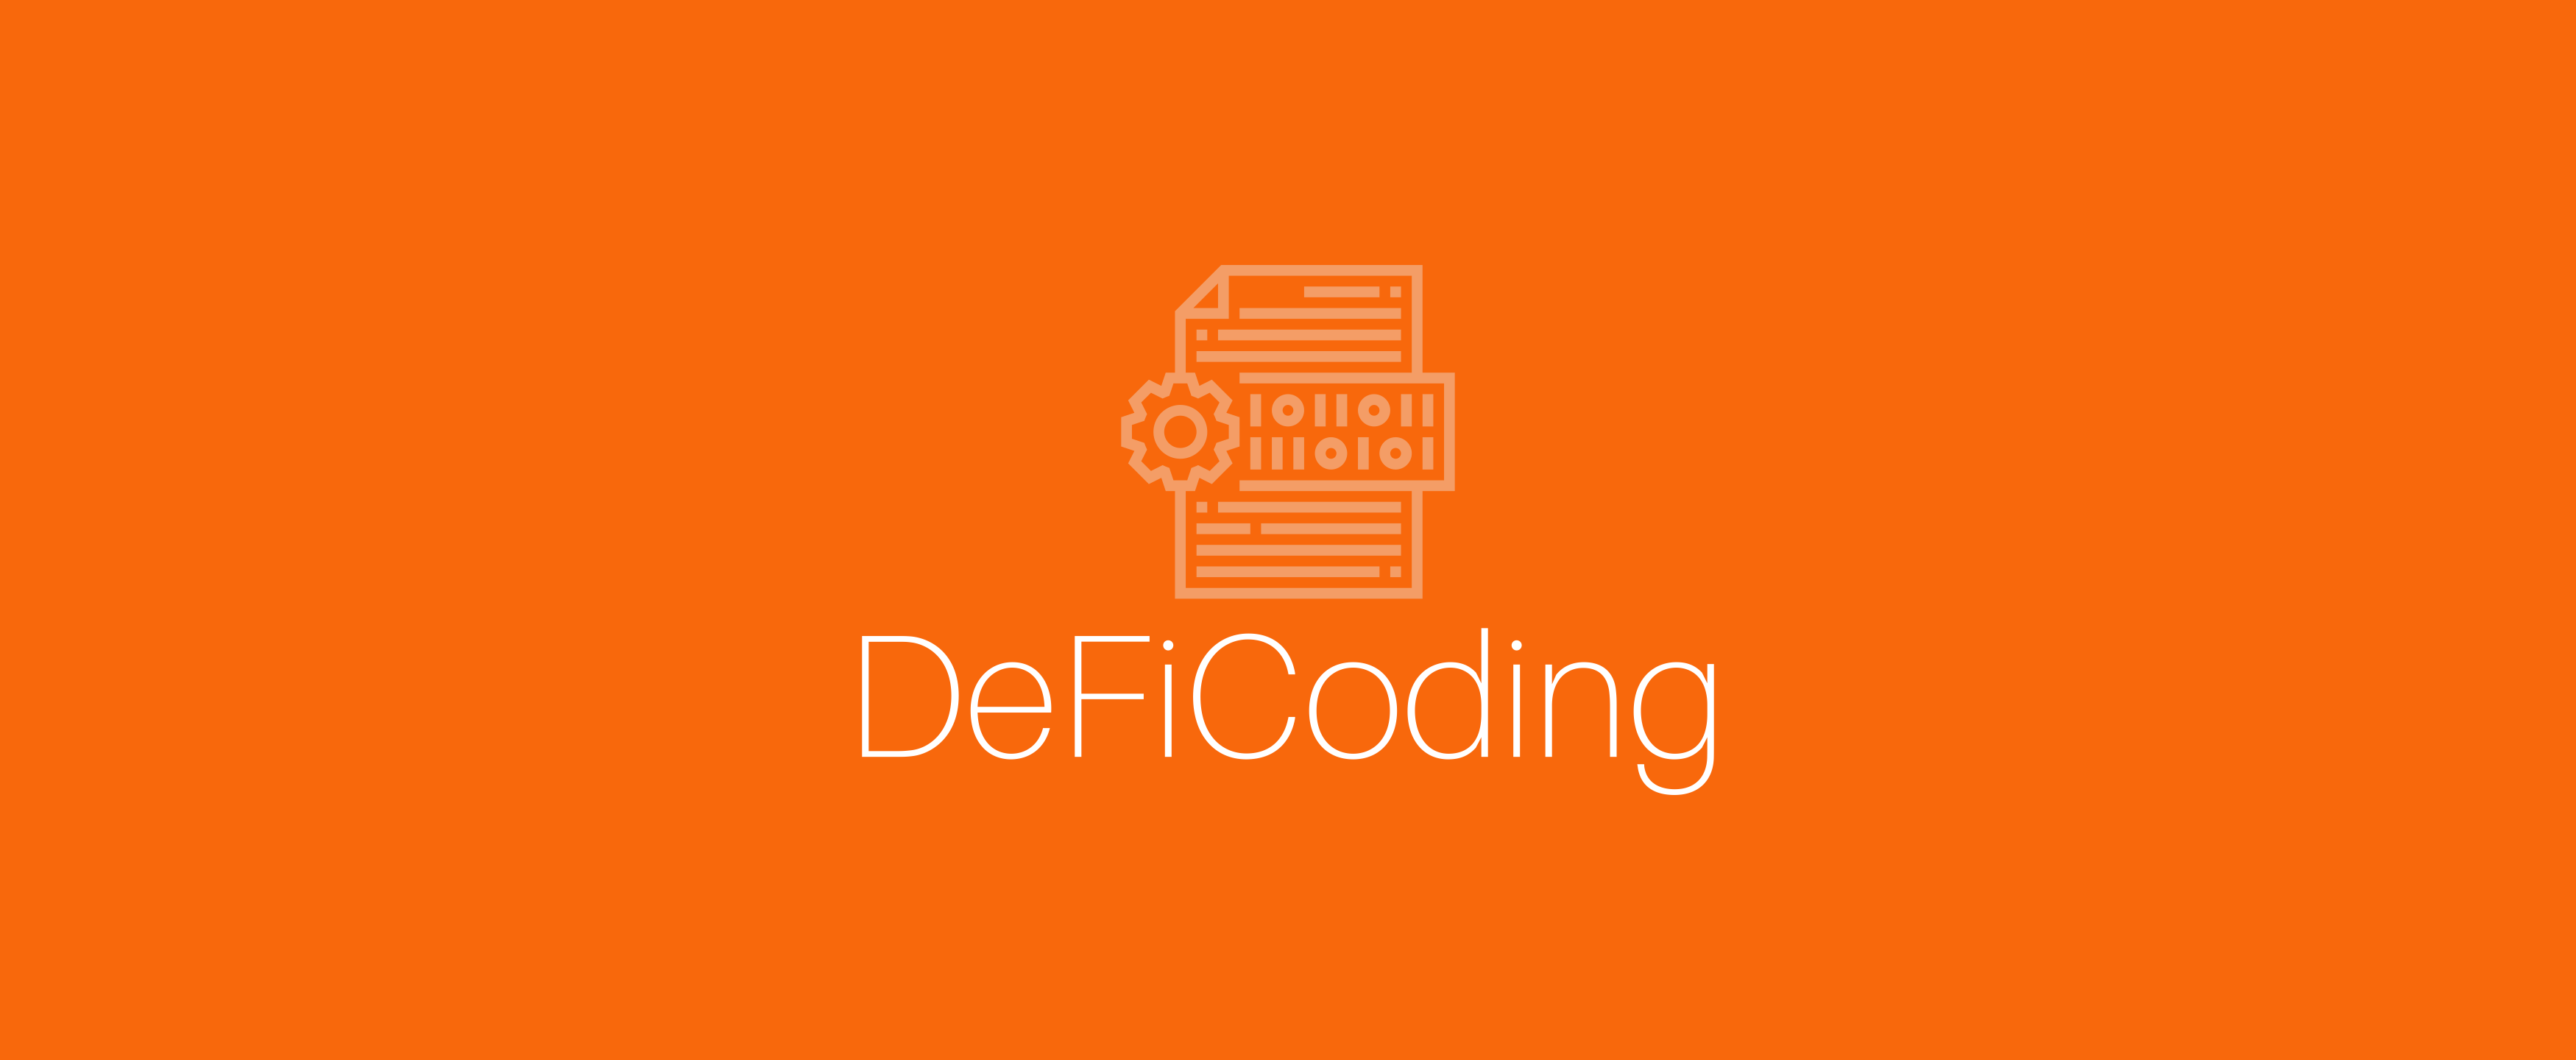 Defi Coding